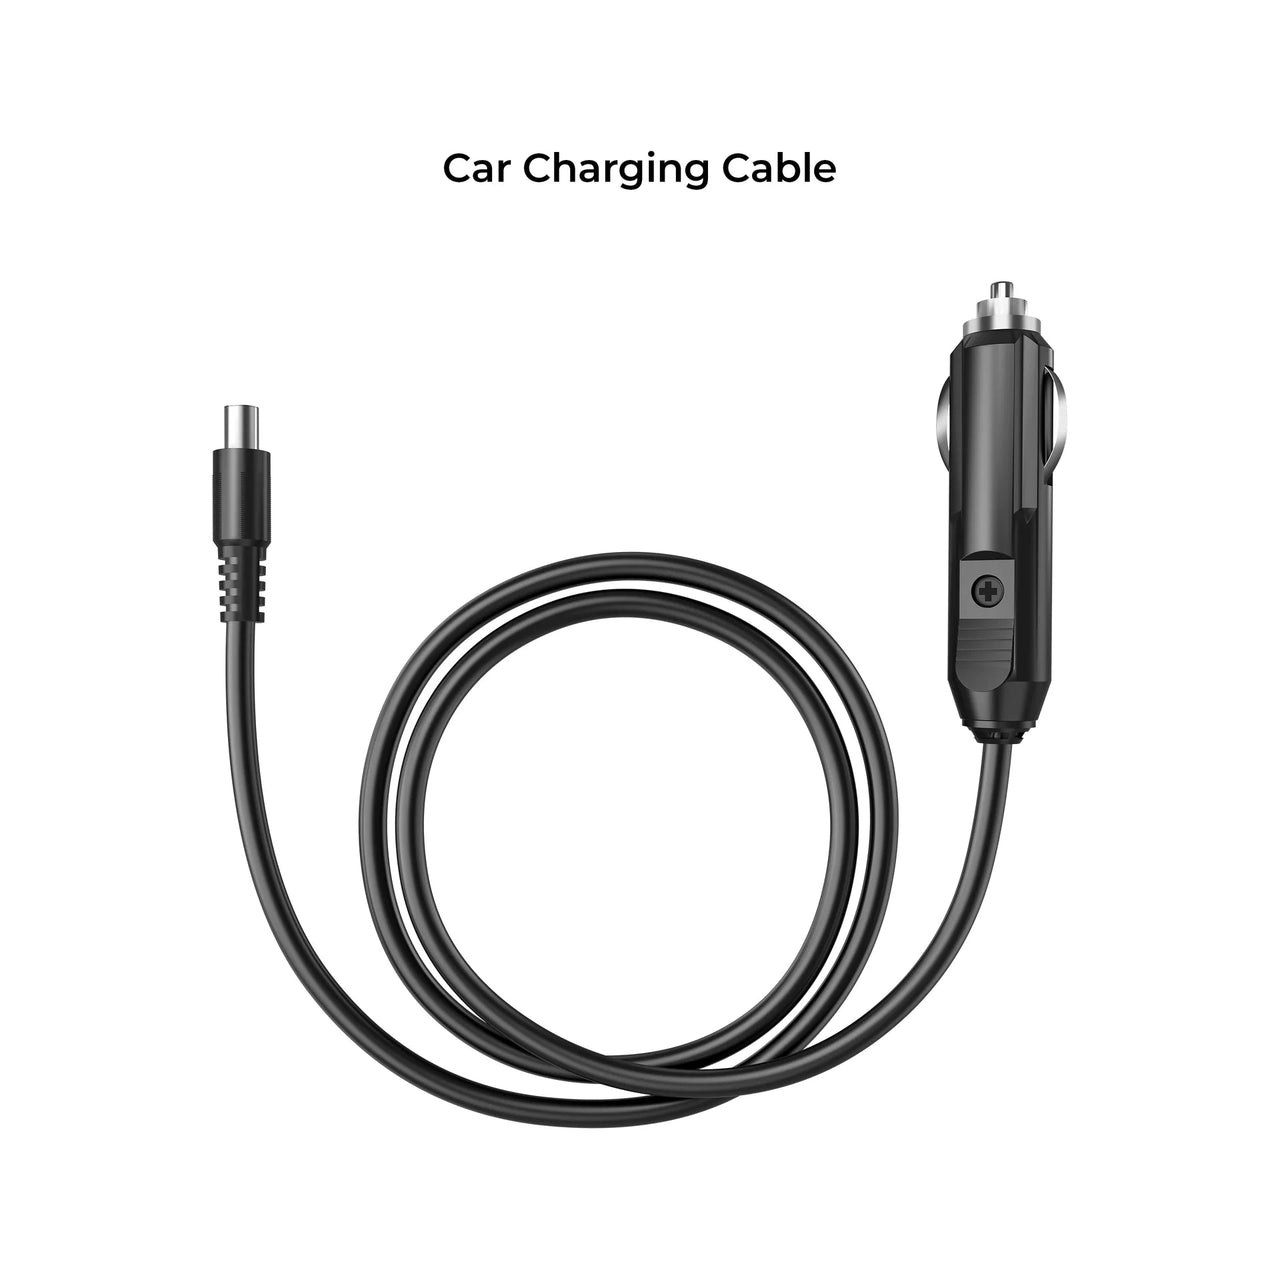 Buy Car Charging Cable - Mud Tracks